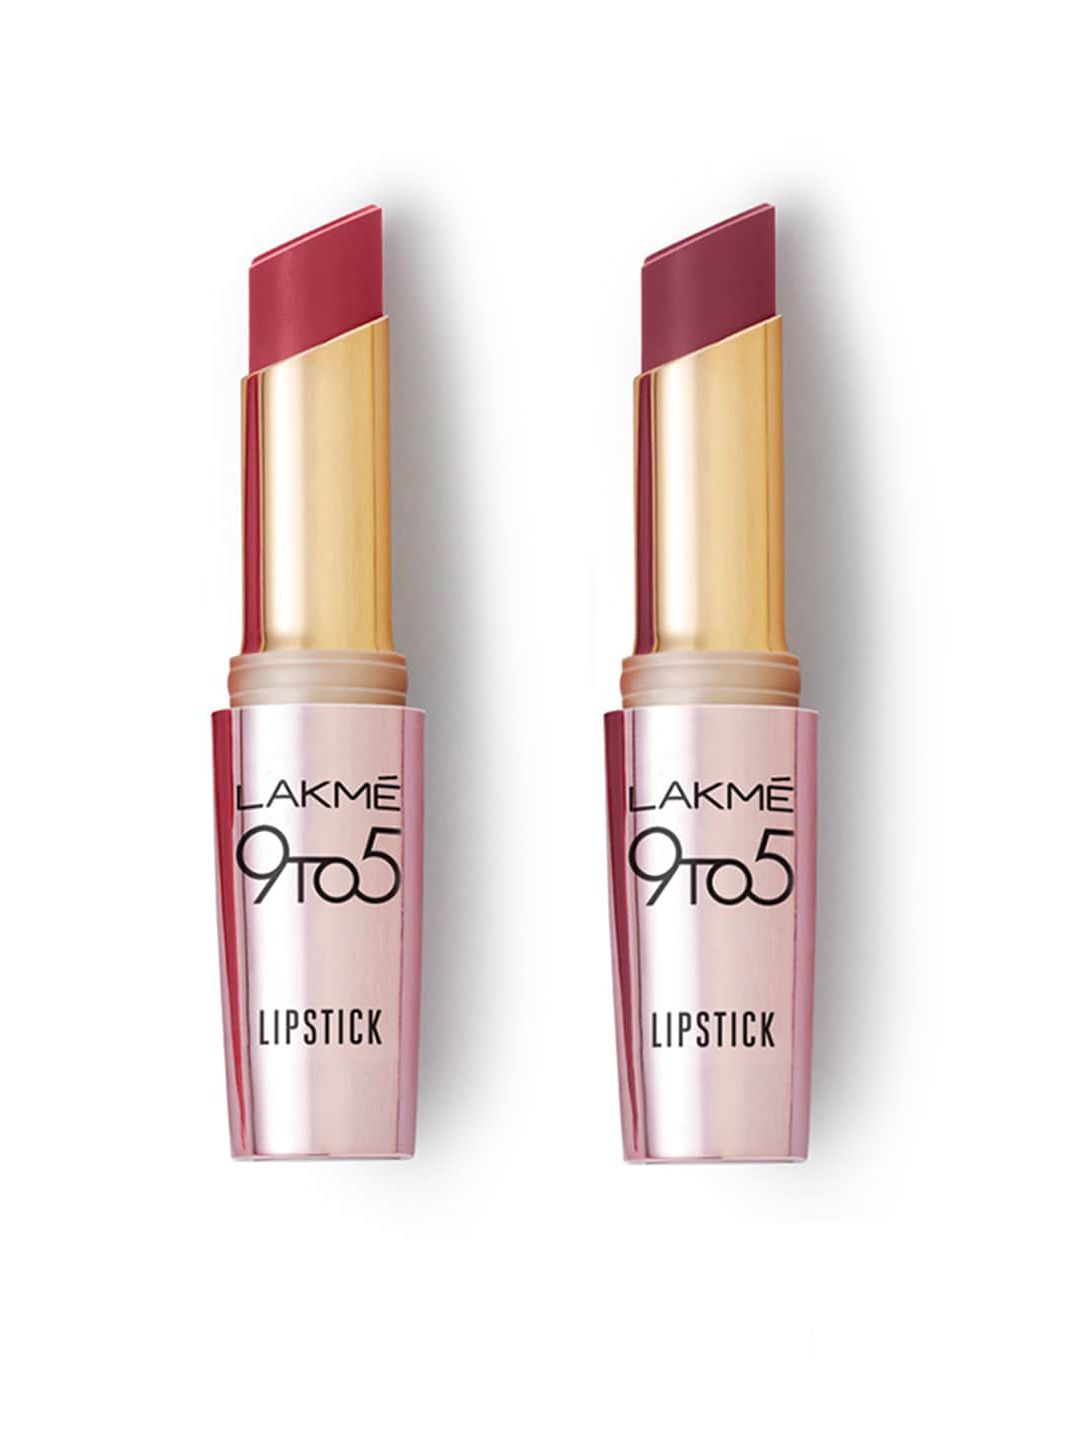 Lakme Set of 2 Lipsticks Price in India